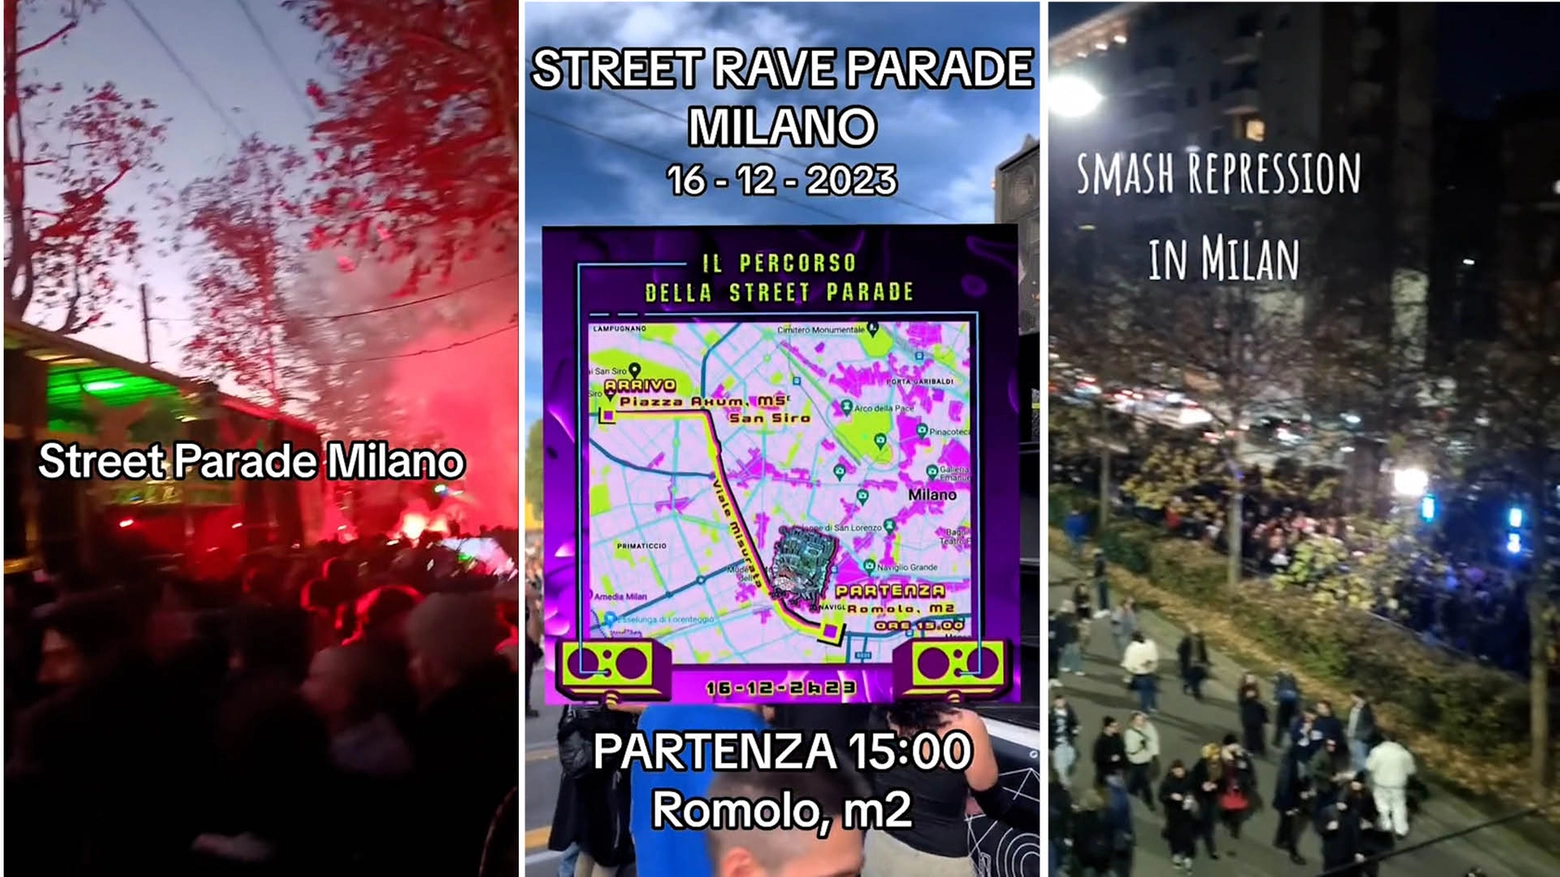 Alcuni frame da video sulla street rave parade in corso a Milano